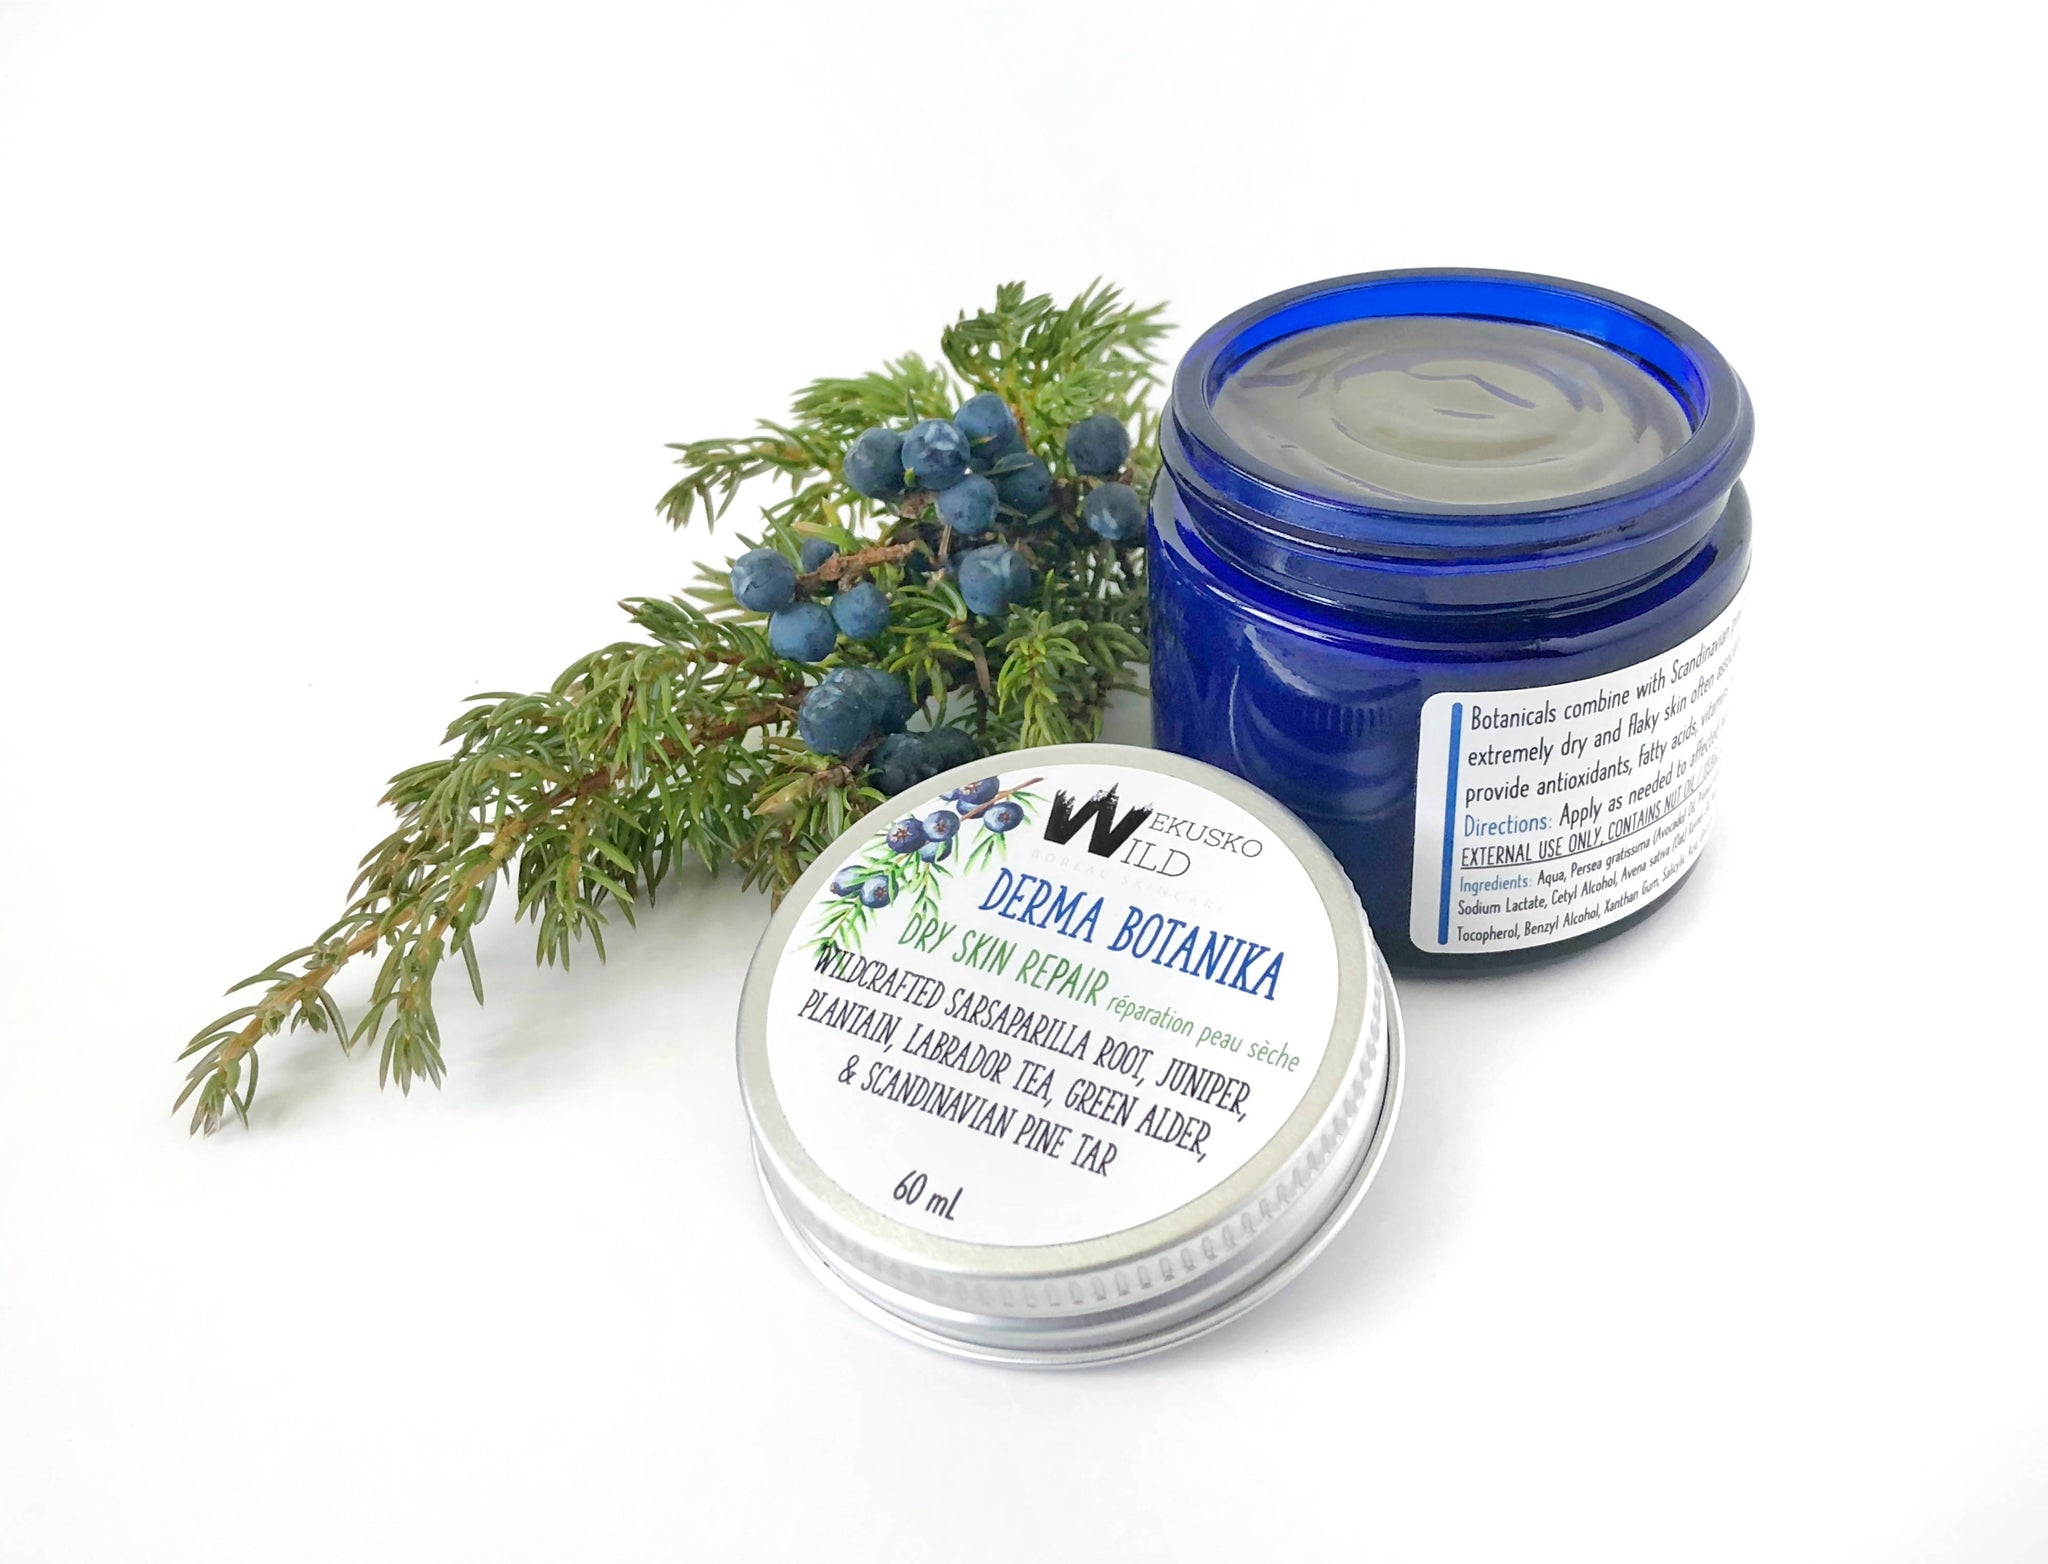 tar cream derma botanika eczema moisturizing skin herbal boreal botanical manitoba canada